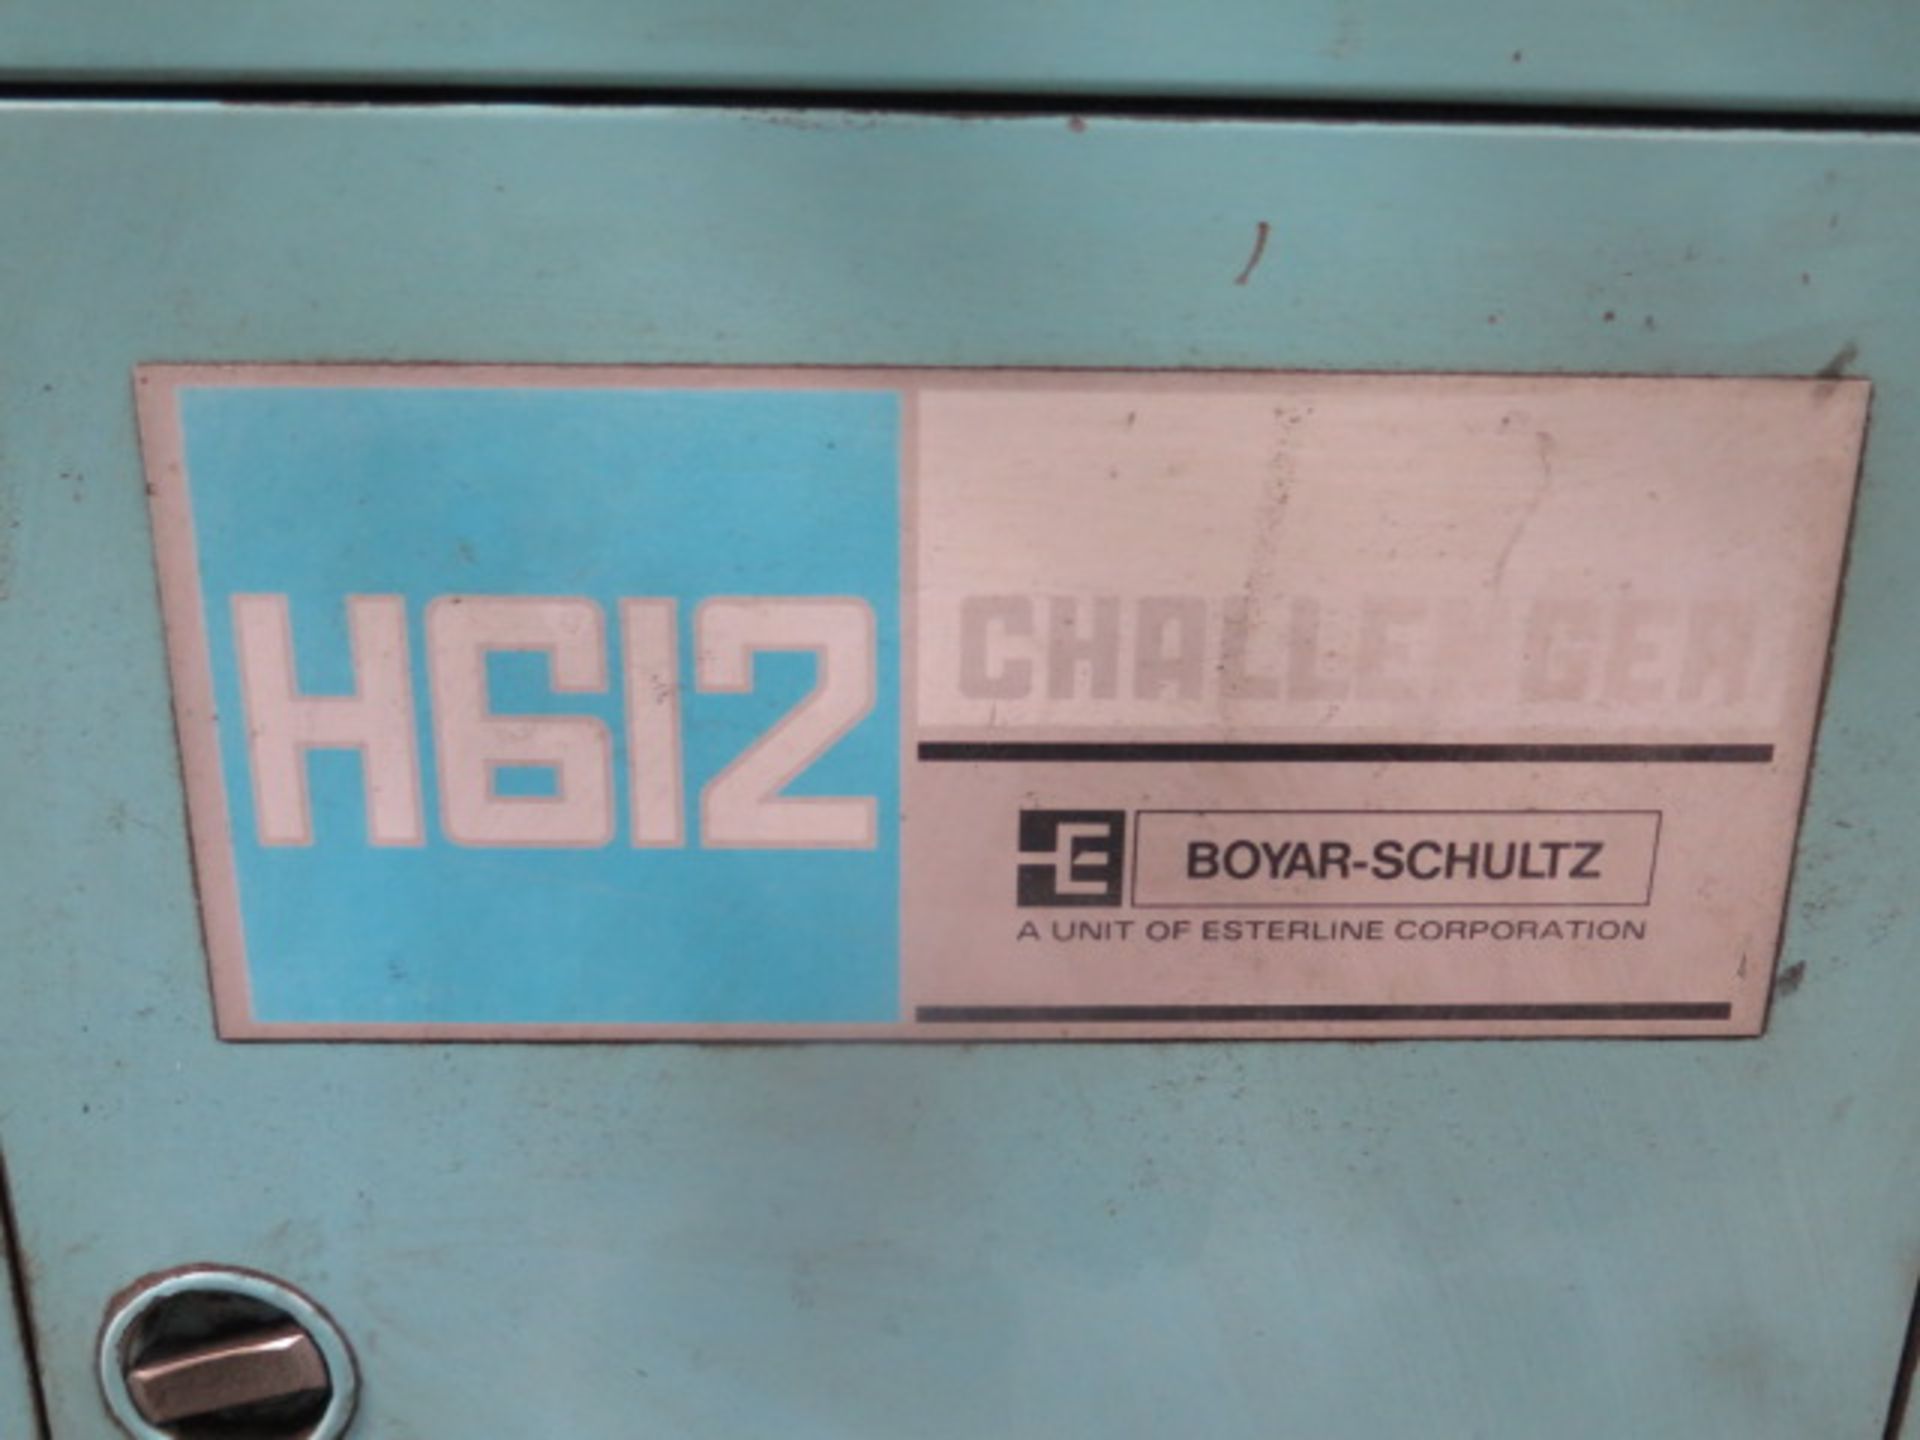 Boyar Schultz Challenger H612 6” x 12” Surface Grinder w/ Walker Electromagnetic Chuck, SOLD AS IS - Image 8 of 9